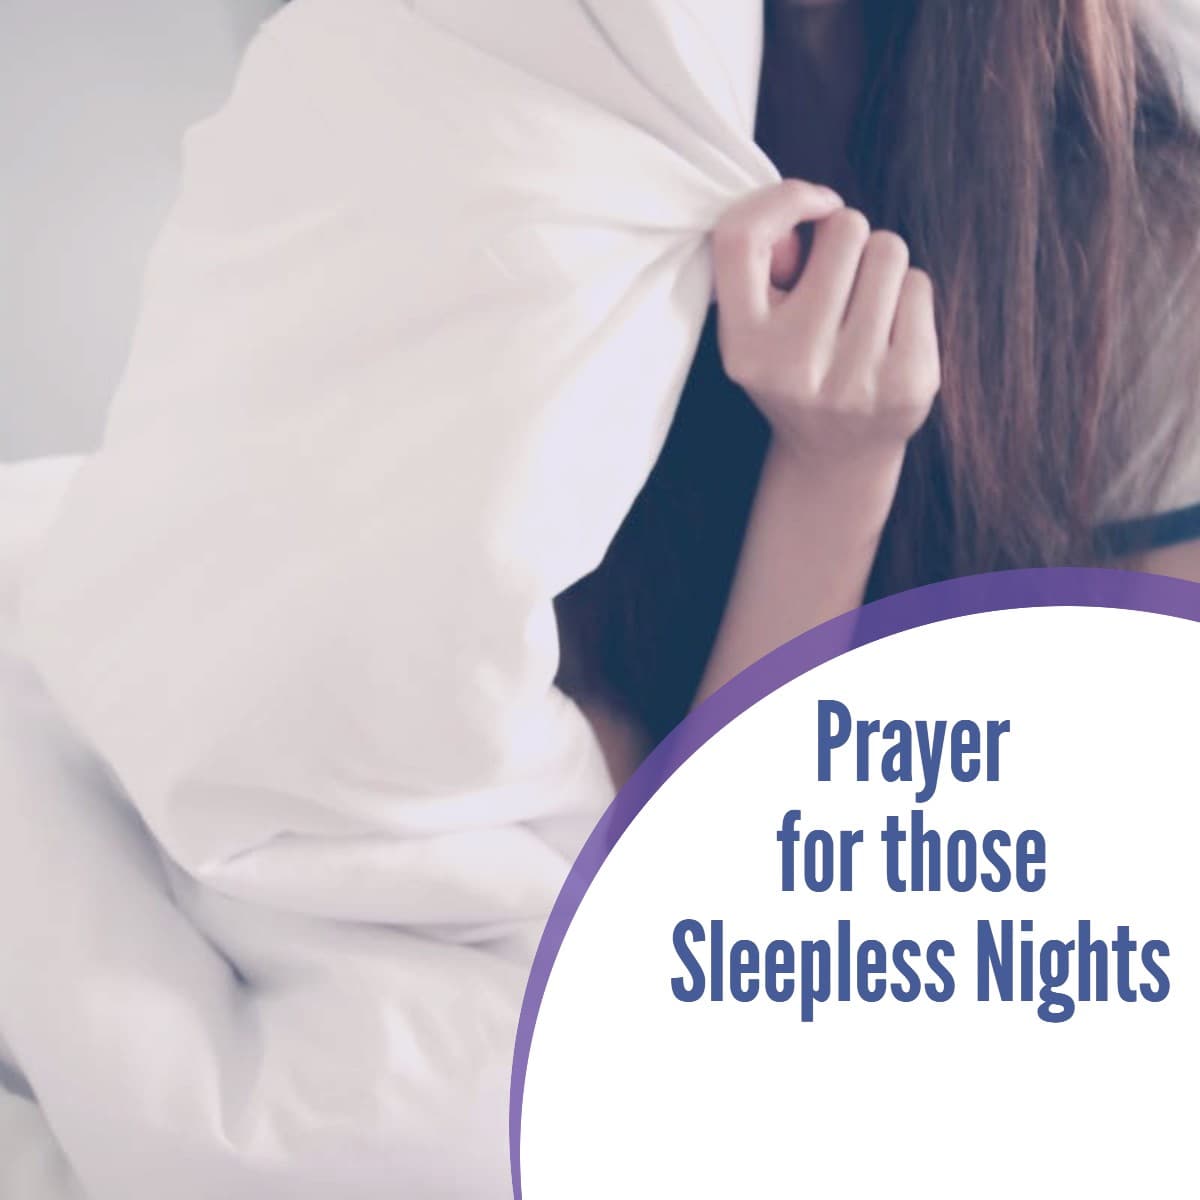 A Prayer for those Sleepless Nights